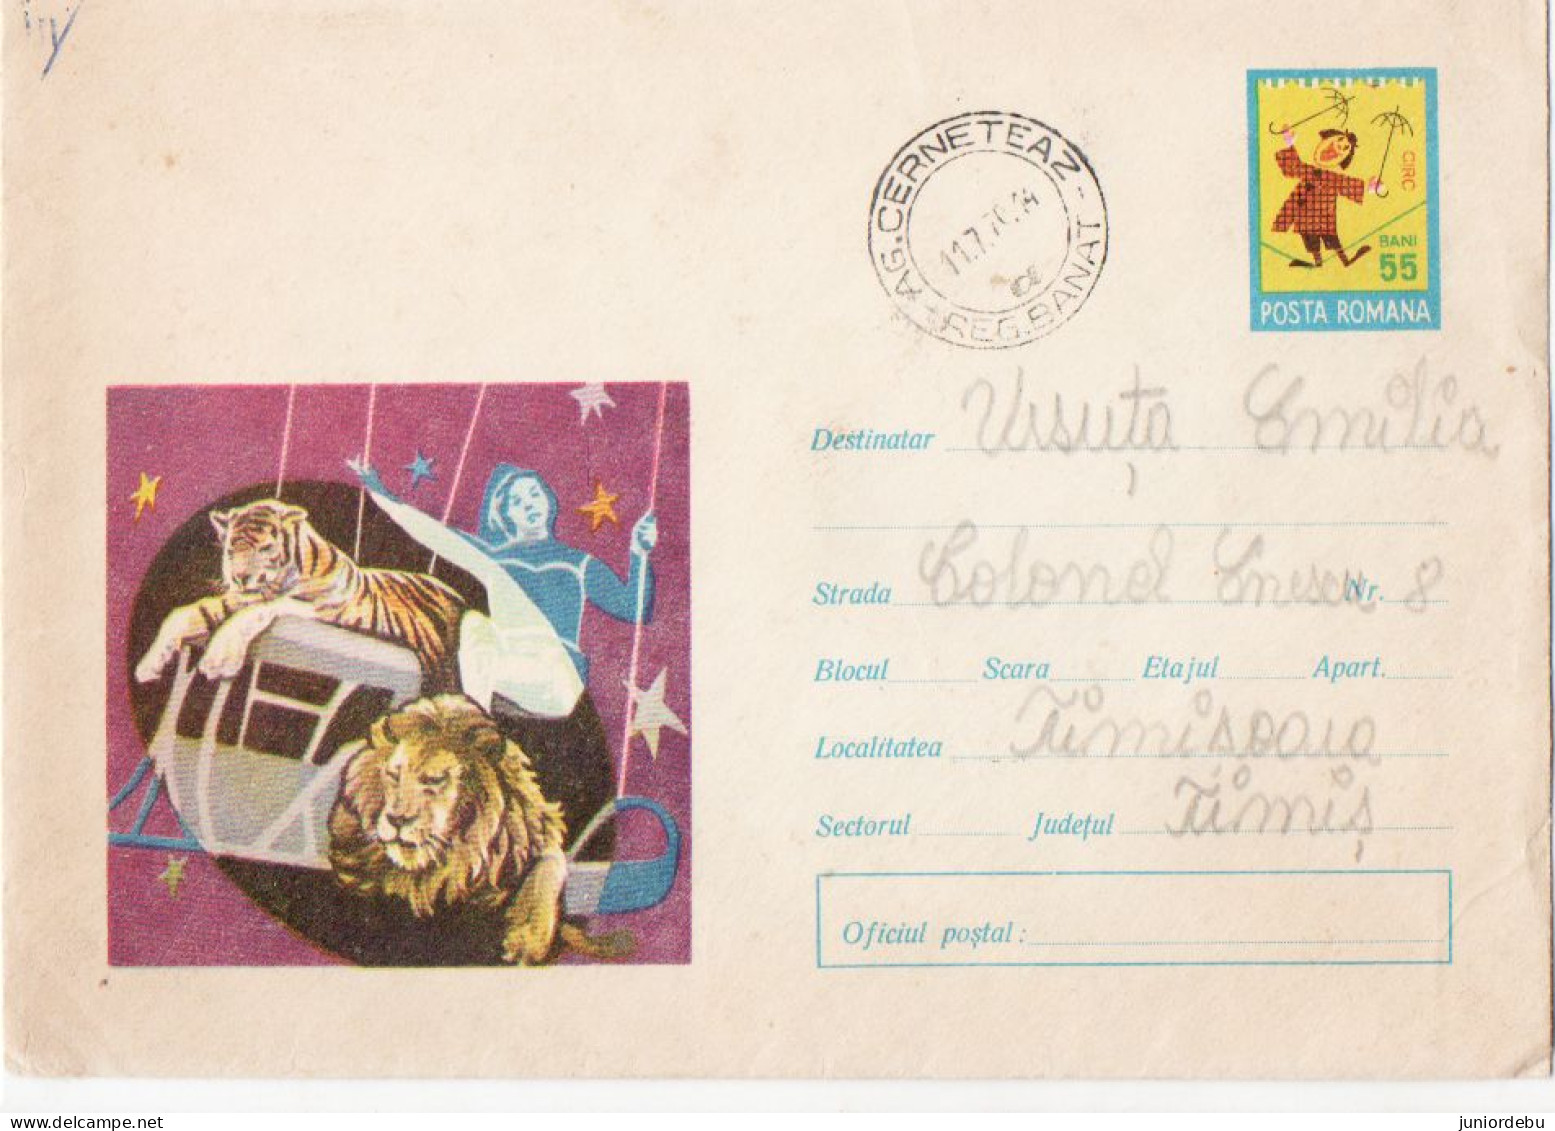 Romania - 1969  - Postal Stationery Cover  - Clown - Used. - Briefe U. Dokumente